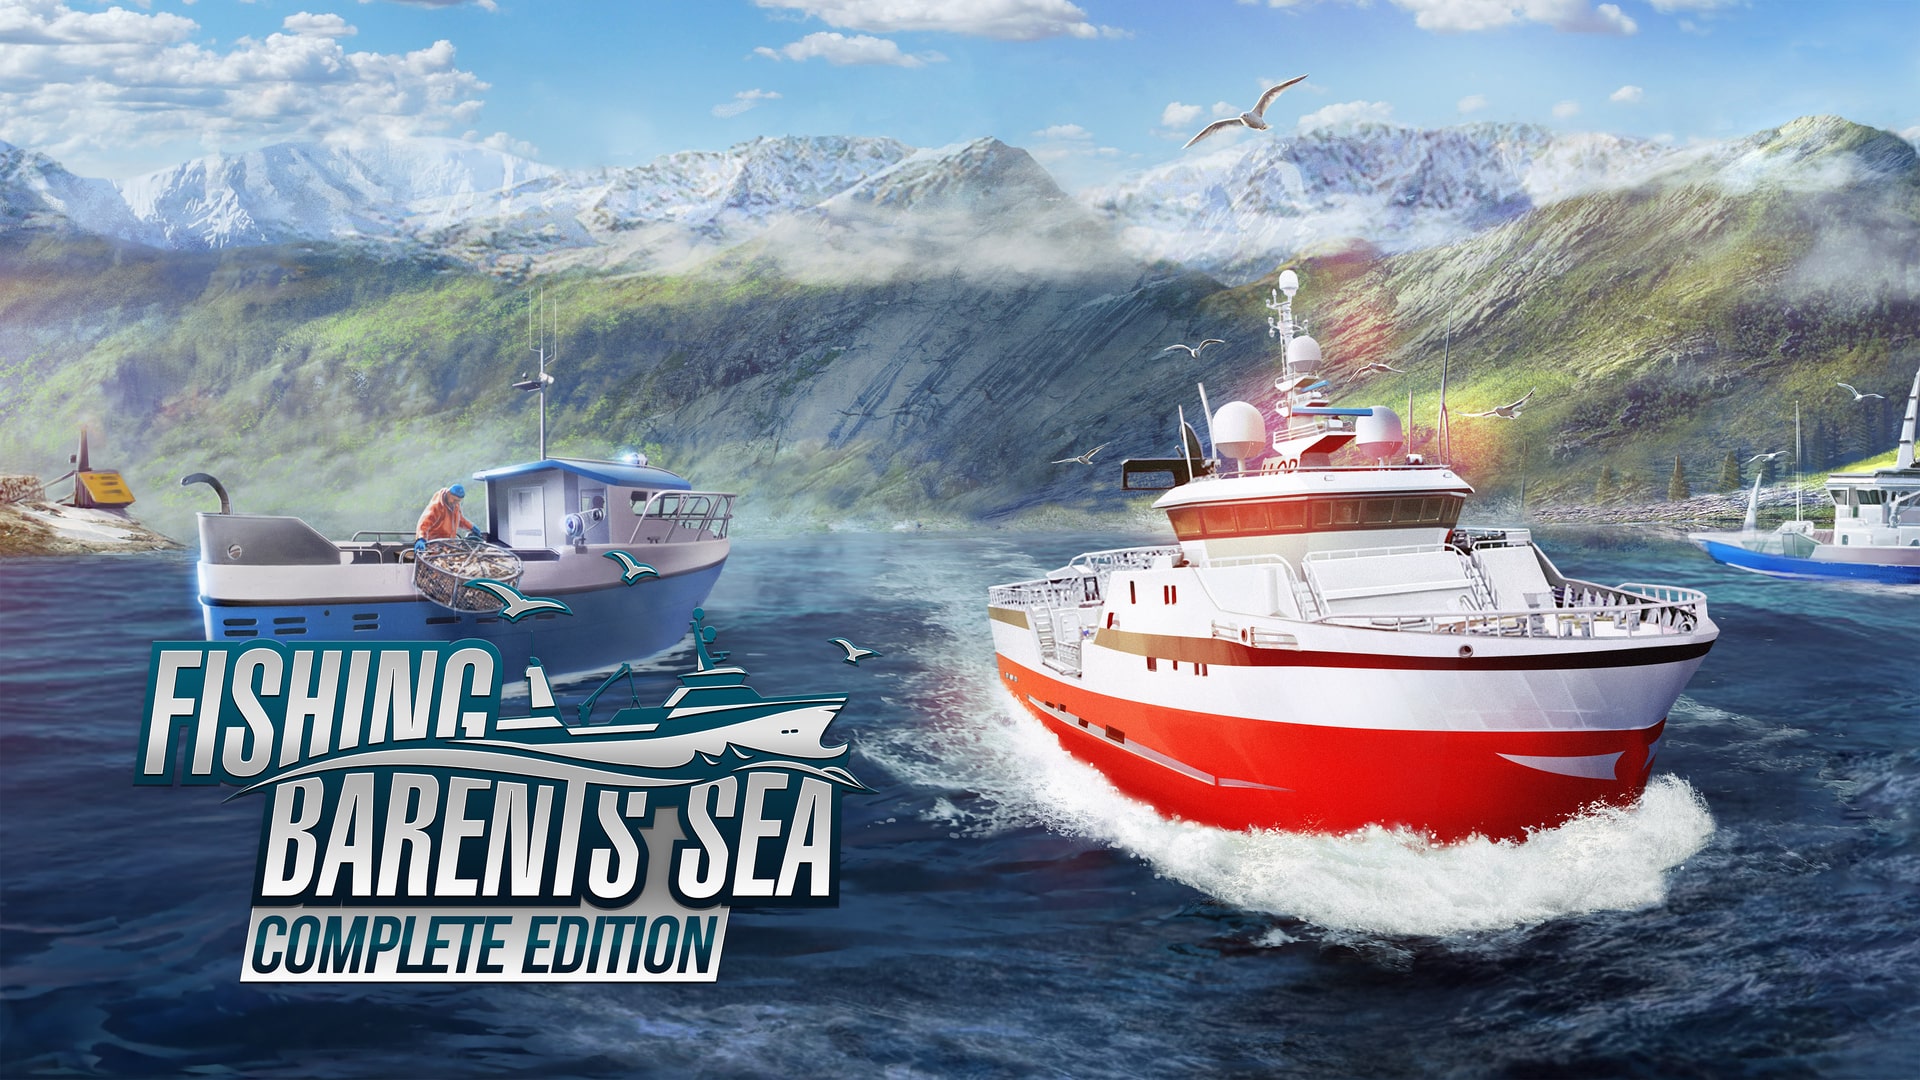 Fishing: Barents Sea Complete Edition (피싱: 바렌츠해 컴플리트 에디션) (중국어(간체자), 한국어, 영어, 일본어, 중국어(번체자))